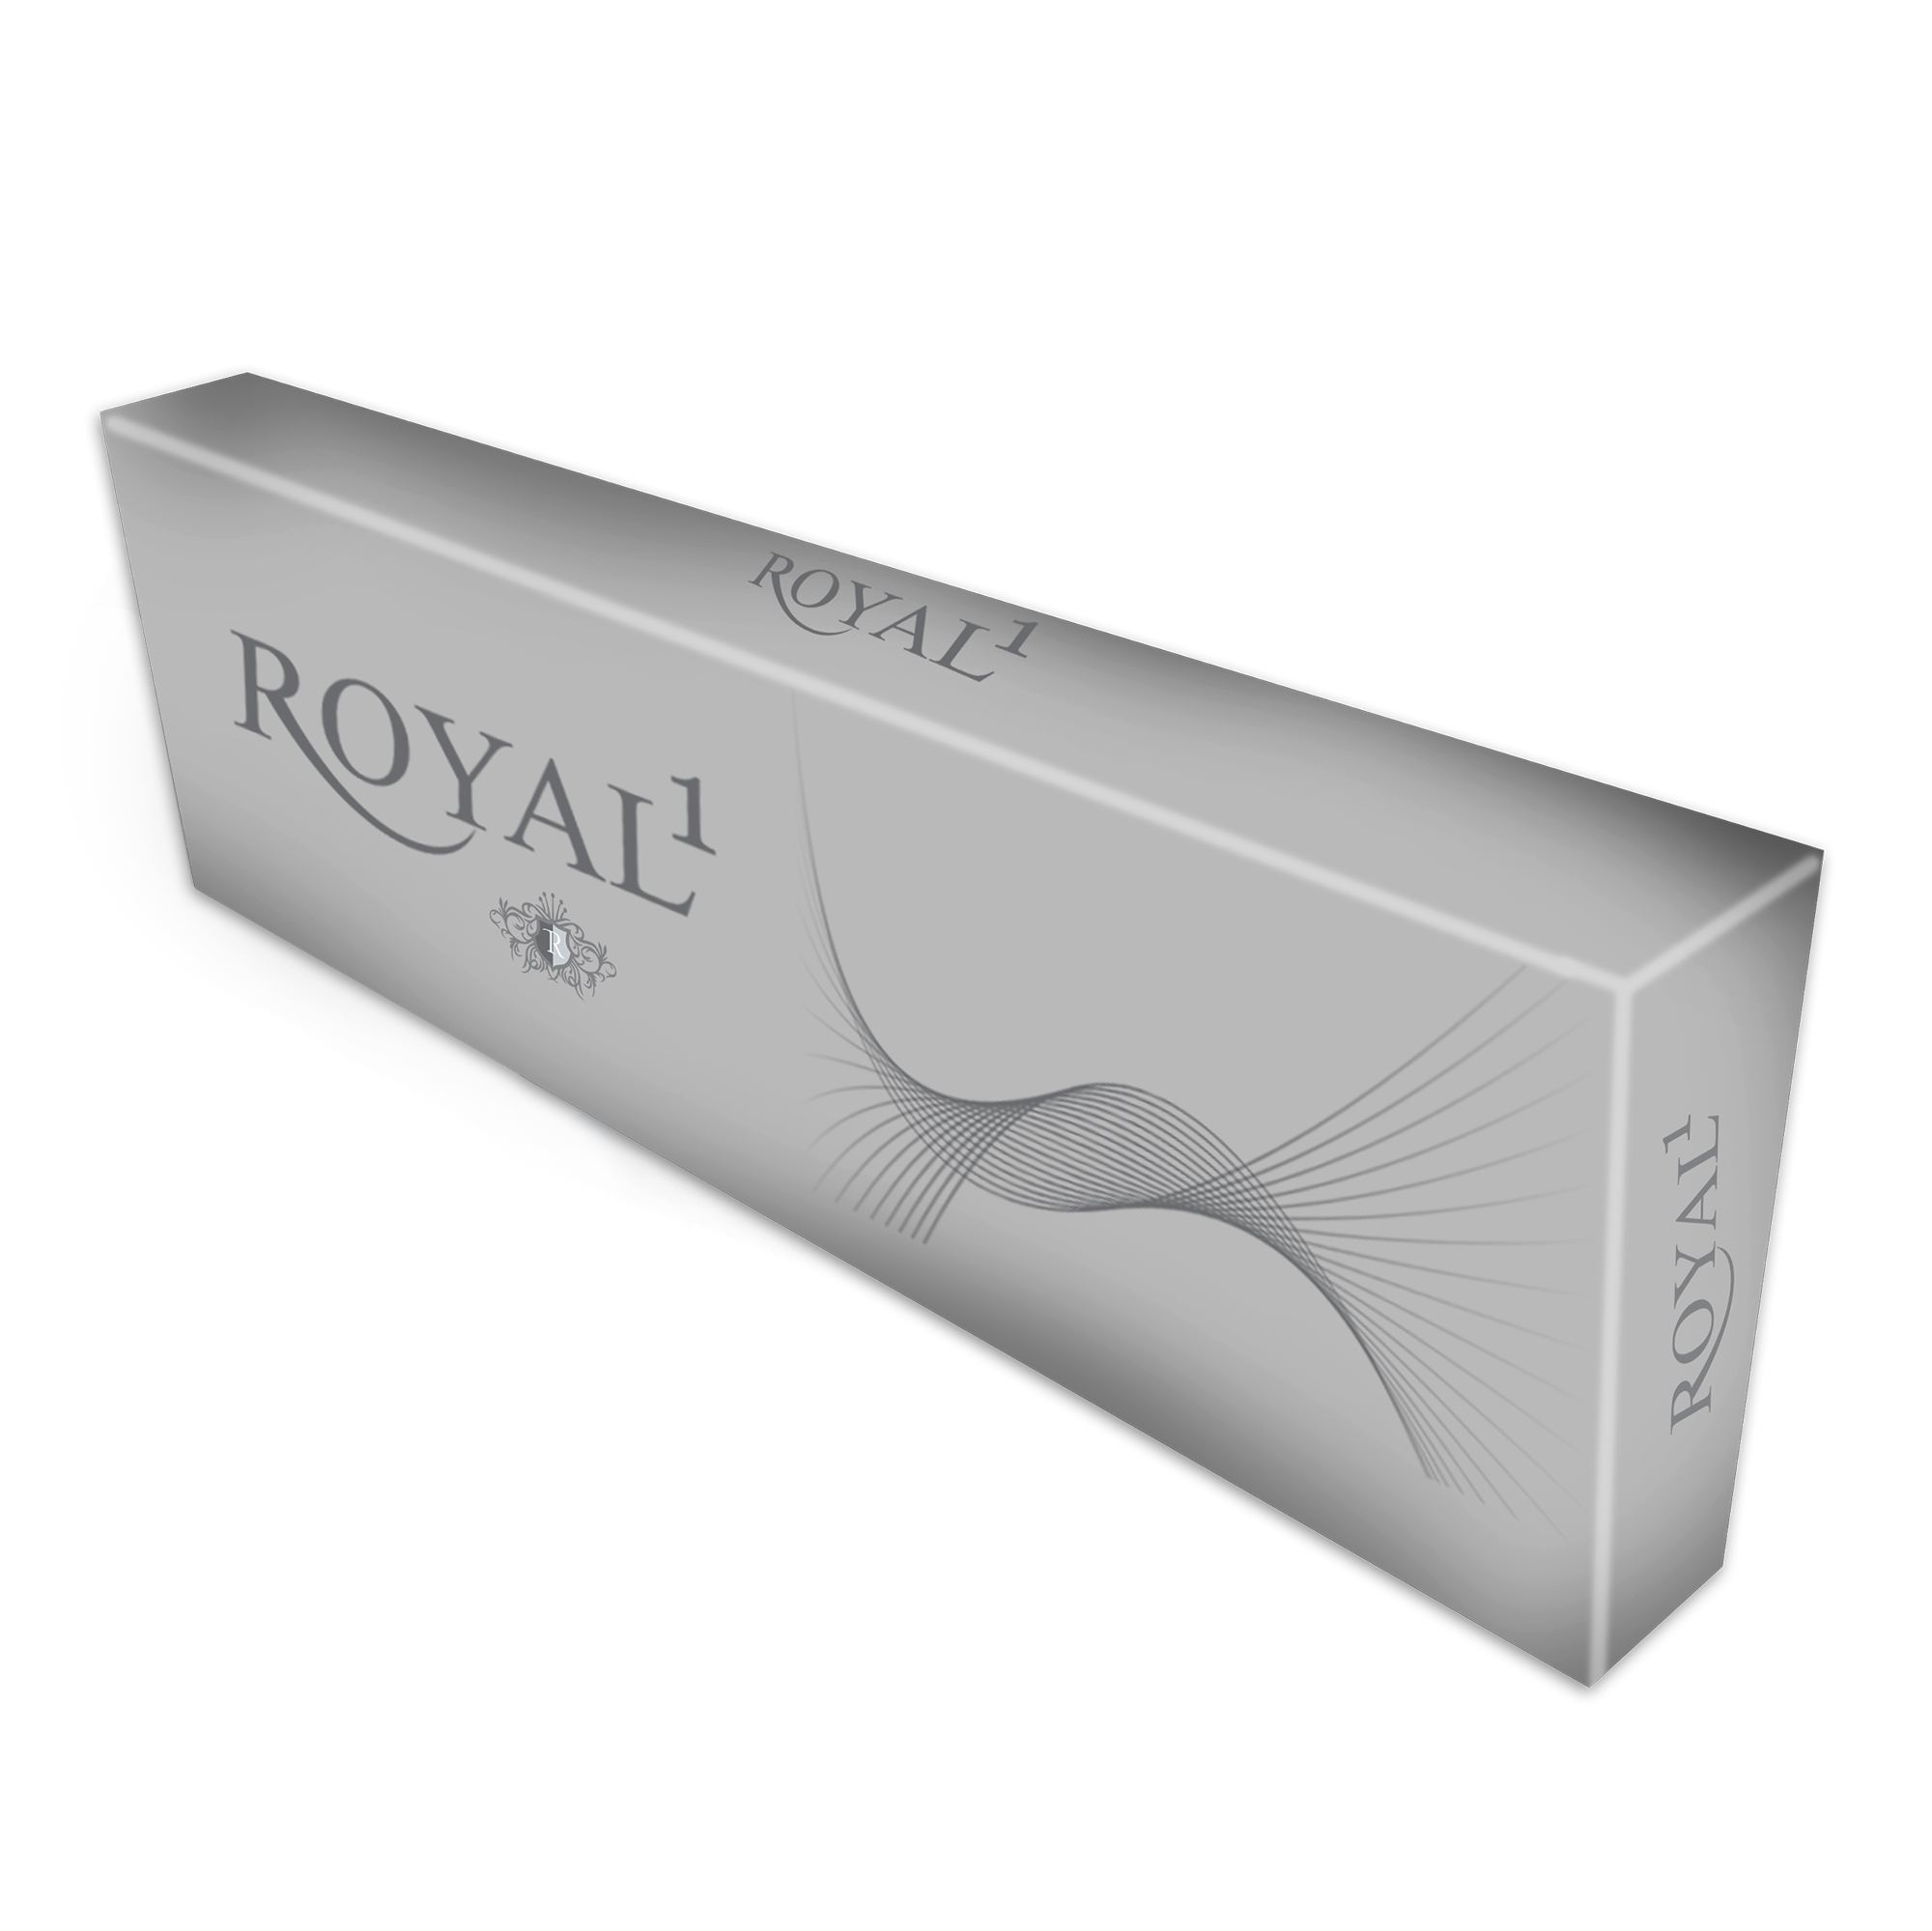  Royal1 Silver box 